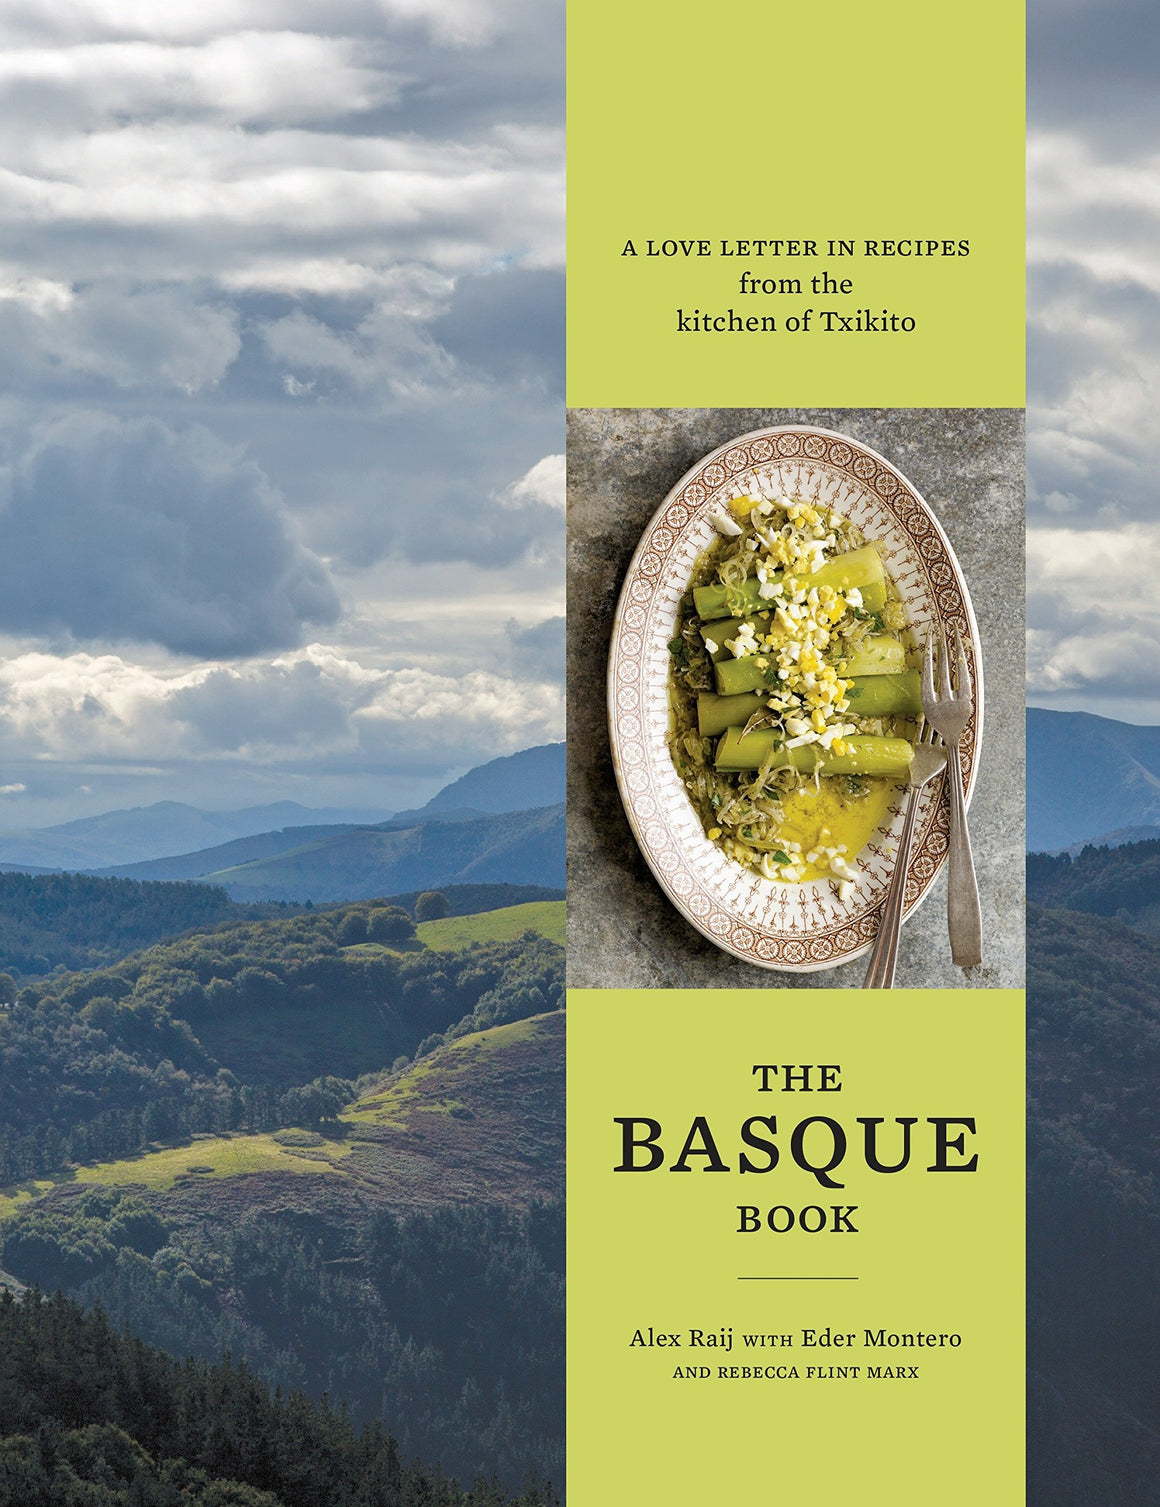 (Spanish) Alexandra Raij, Eder Montero, & Rebecca Flint Marx. The Basque Book: A Love Letter in Recipes from the Kitchen of Txikito